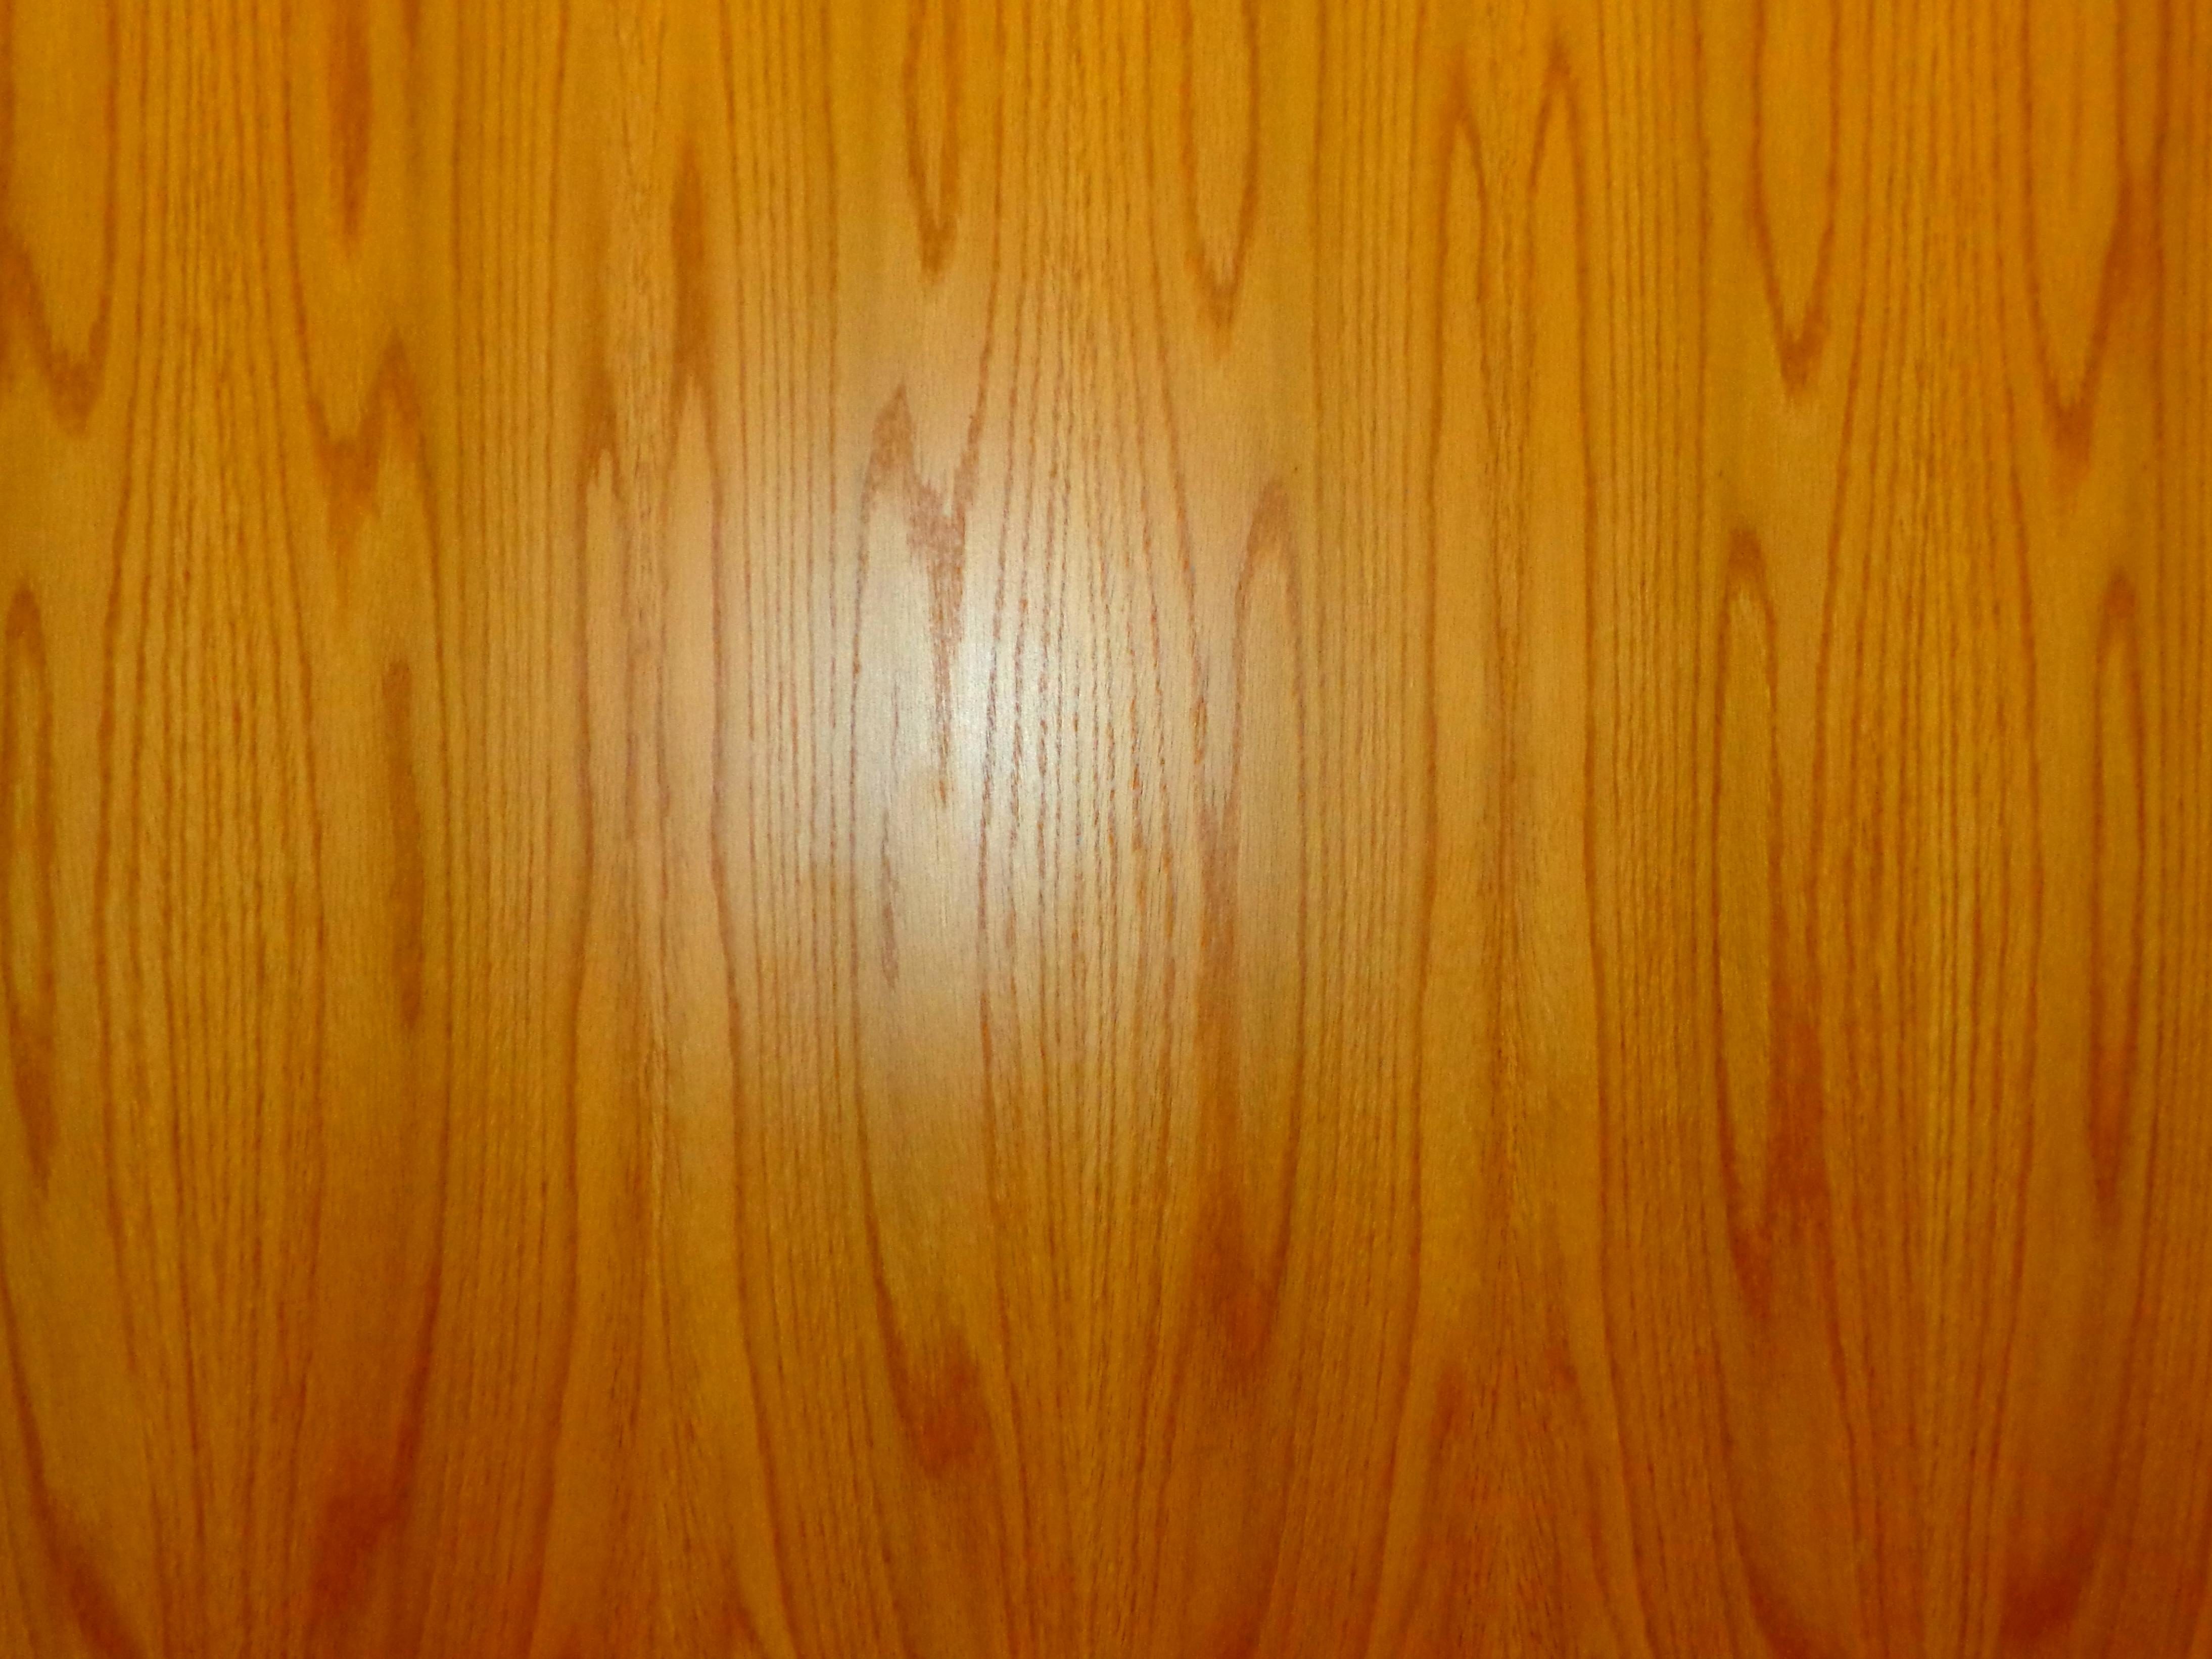 texture floor in wood, texture, Free grain, picture: parquet